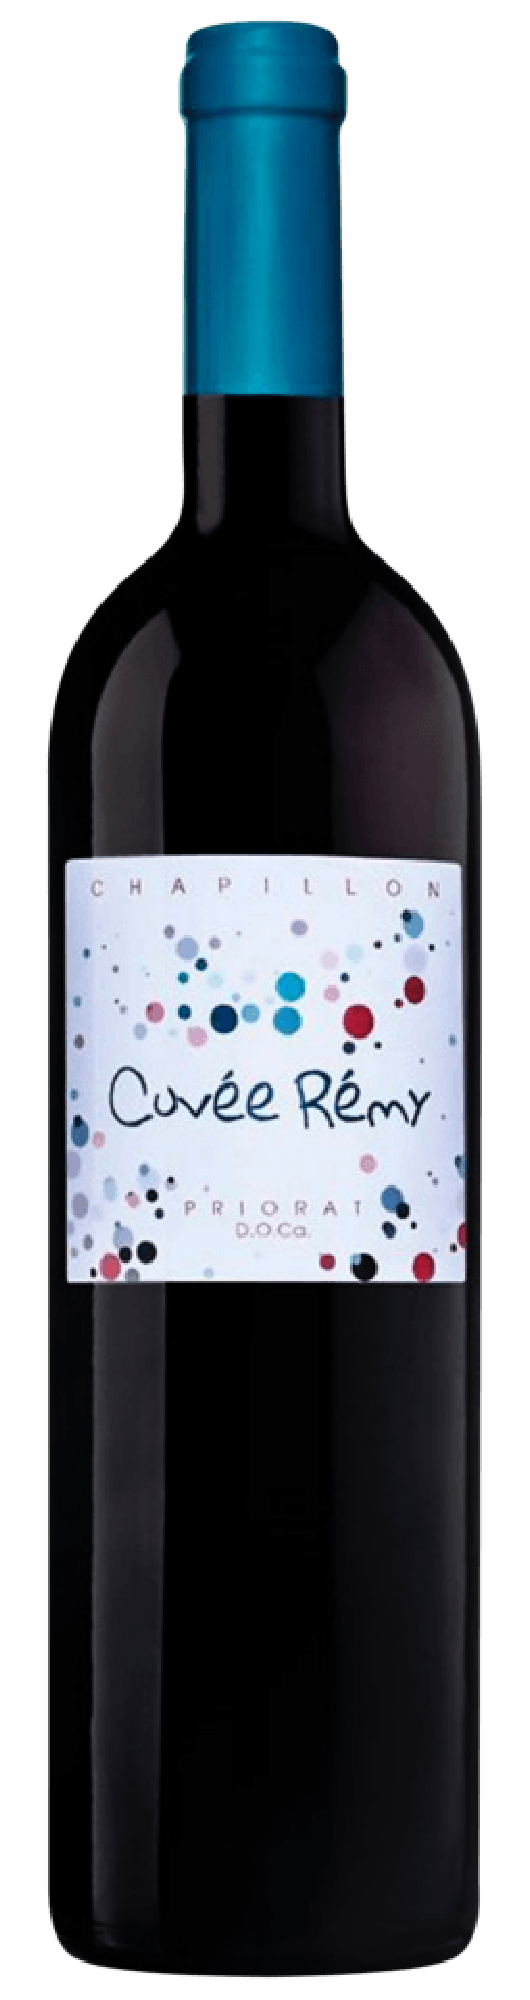 Wine Chapillon Cuvee Remy Priorat DOCa